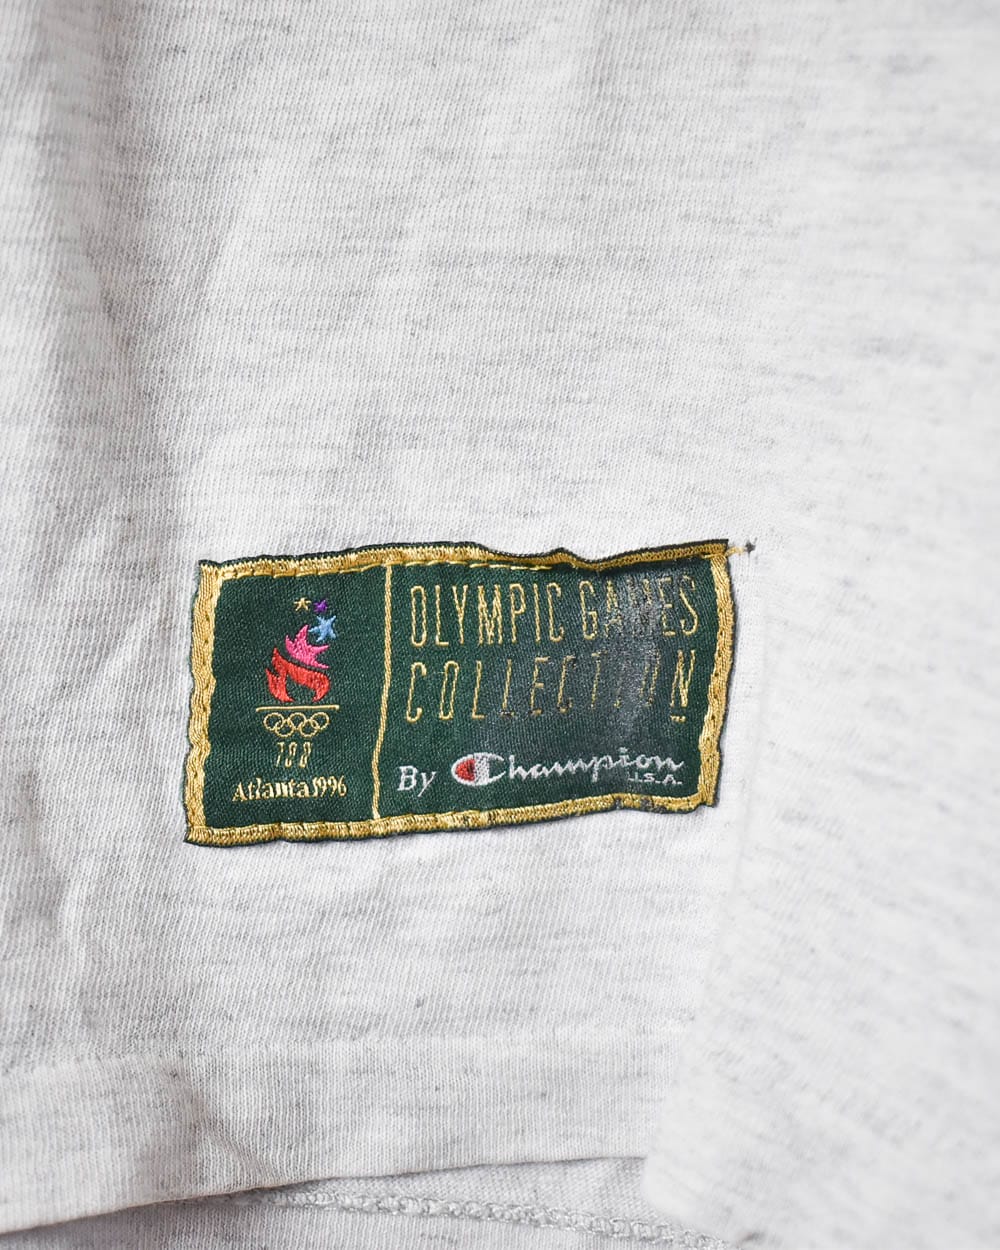 Stone Champion Olympics Games Collection Atlanta 1996 T-Shirt - Small